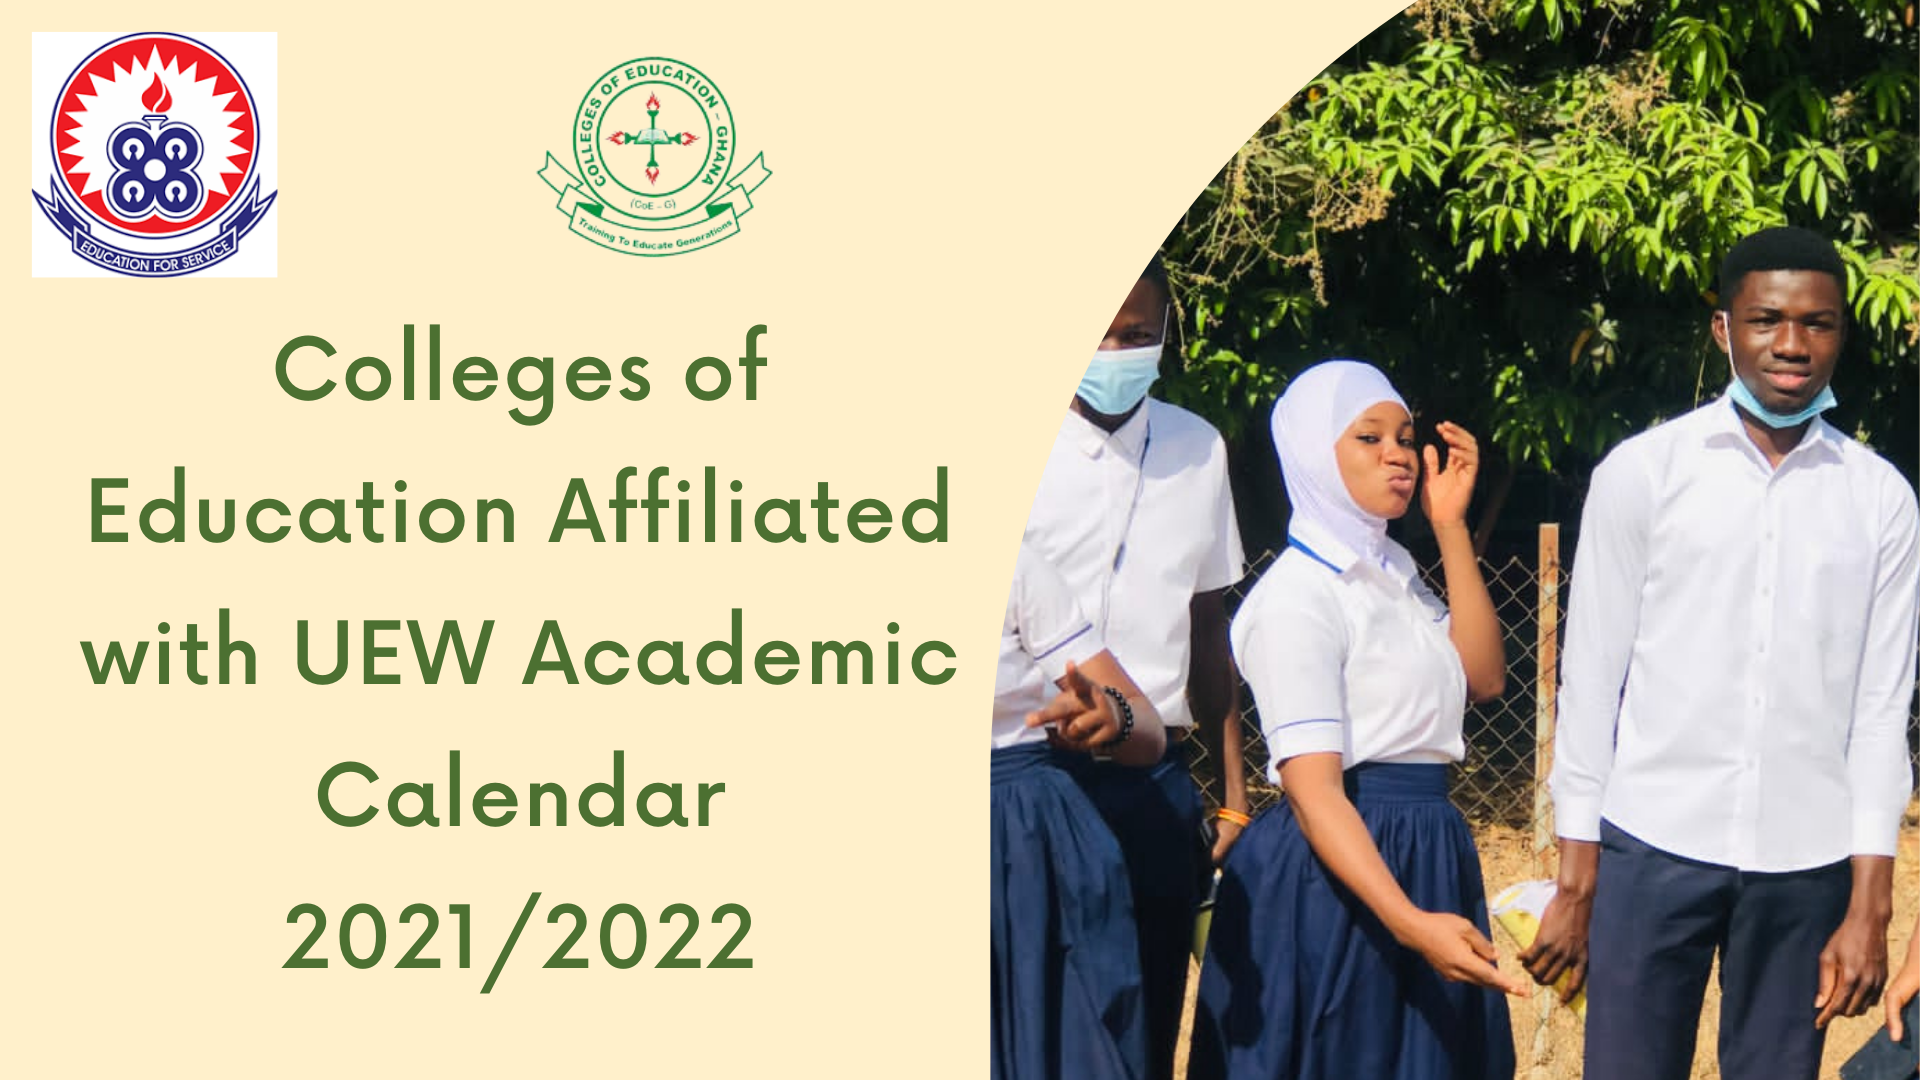 Ttu Academic Calendar 2022 2023 Colleges Of Education Affiliated With Uew Academic Calendar 2021/2022